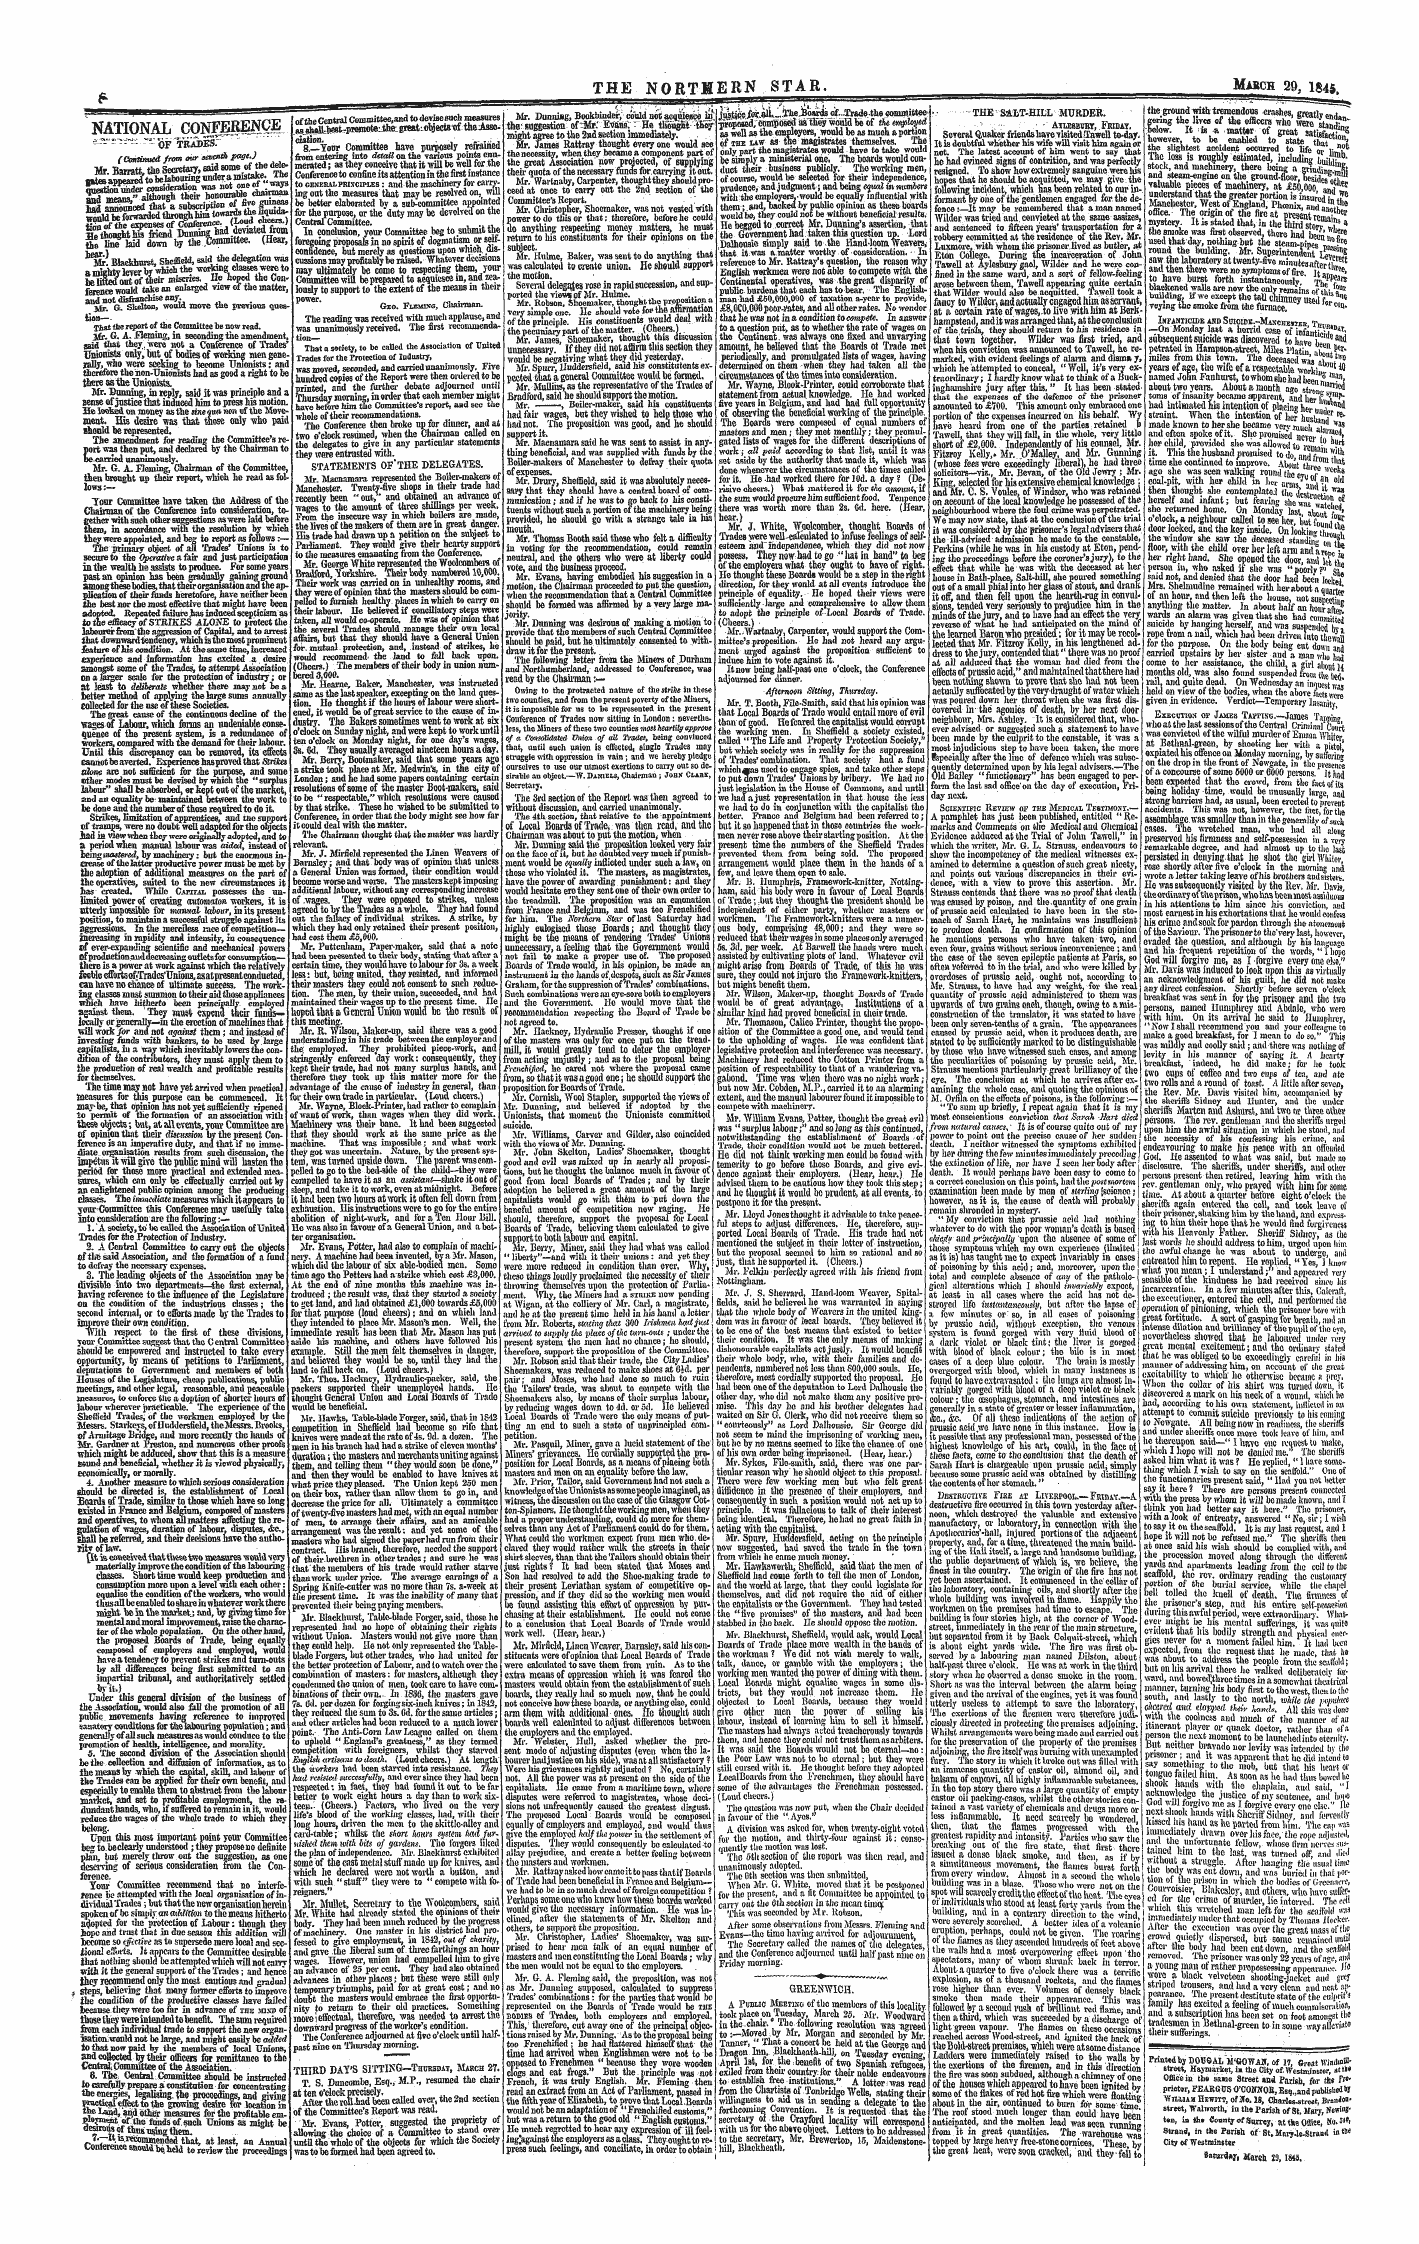 Northern Star (1837-1852): jS F Y, 1st edition - Greenwich.